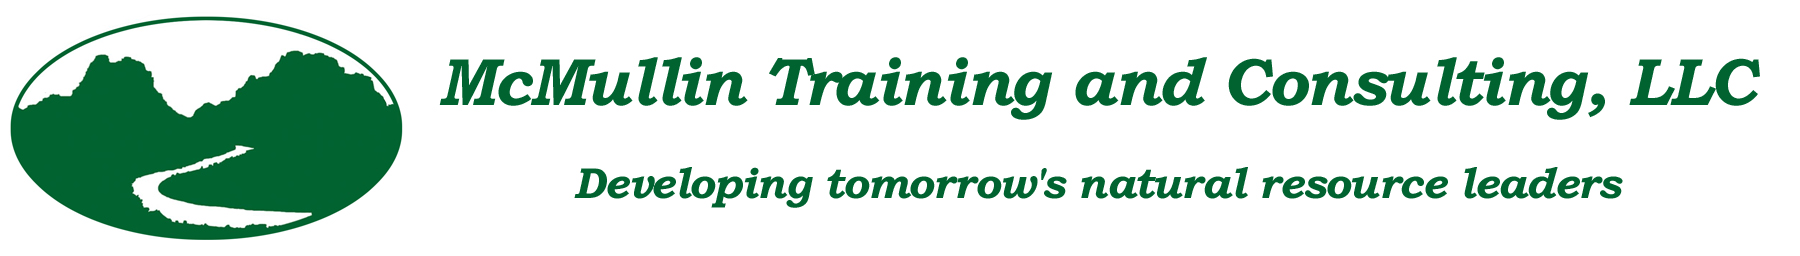 McMullin Training & Consulting, LLC